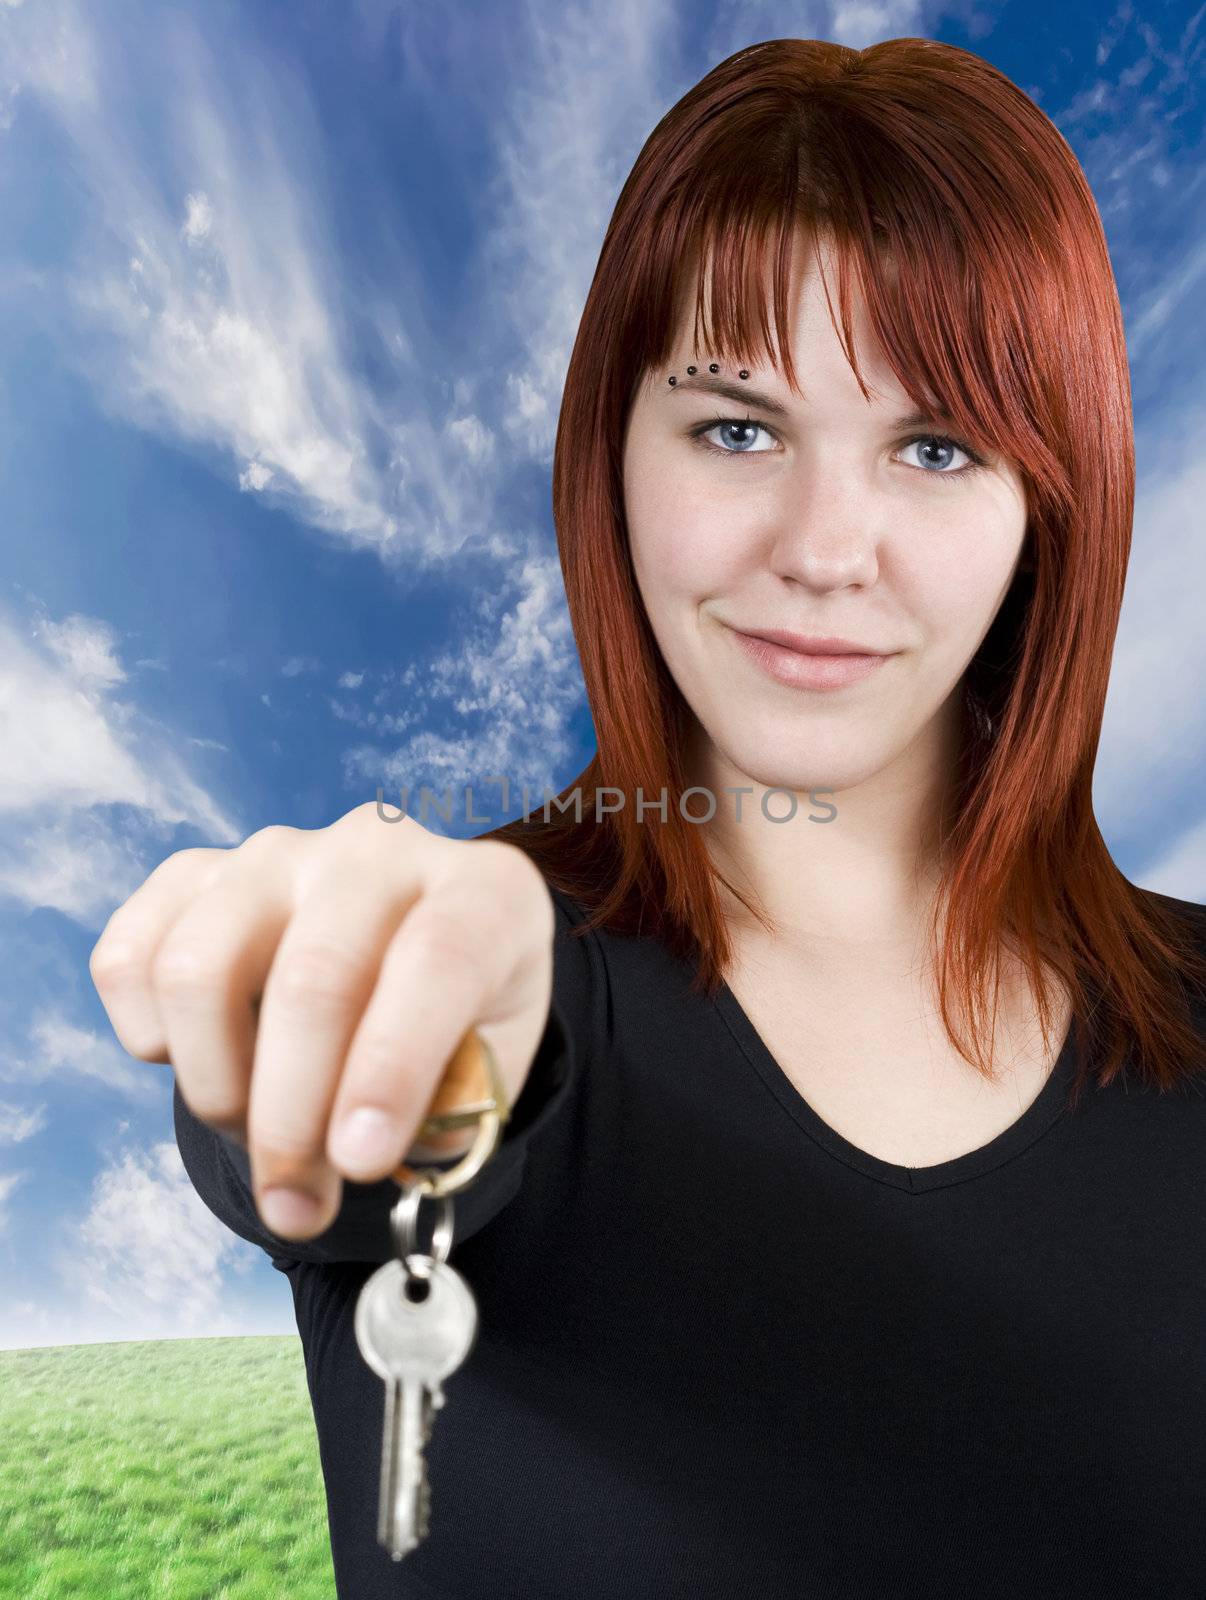 Redhead girl passing keys by domencolja